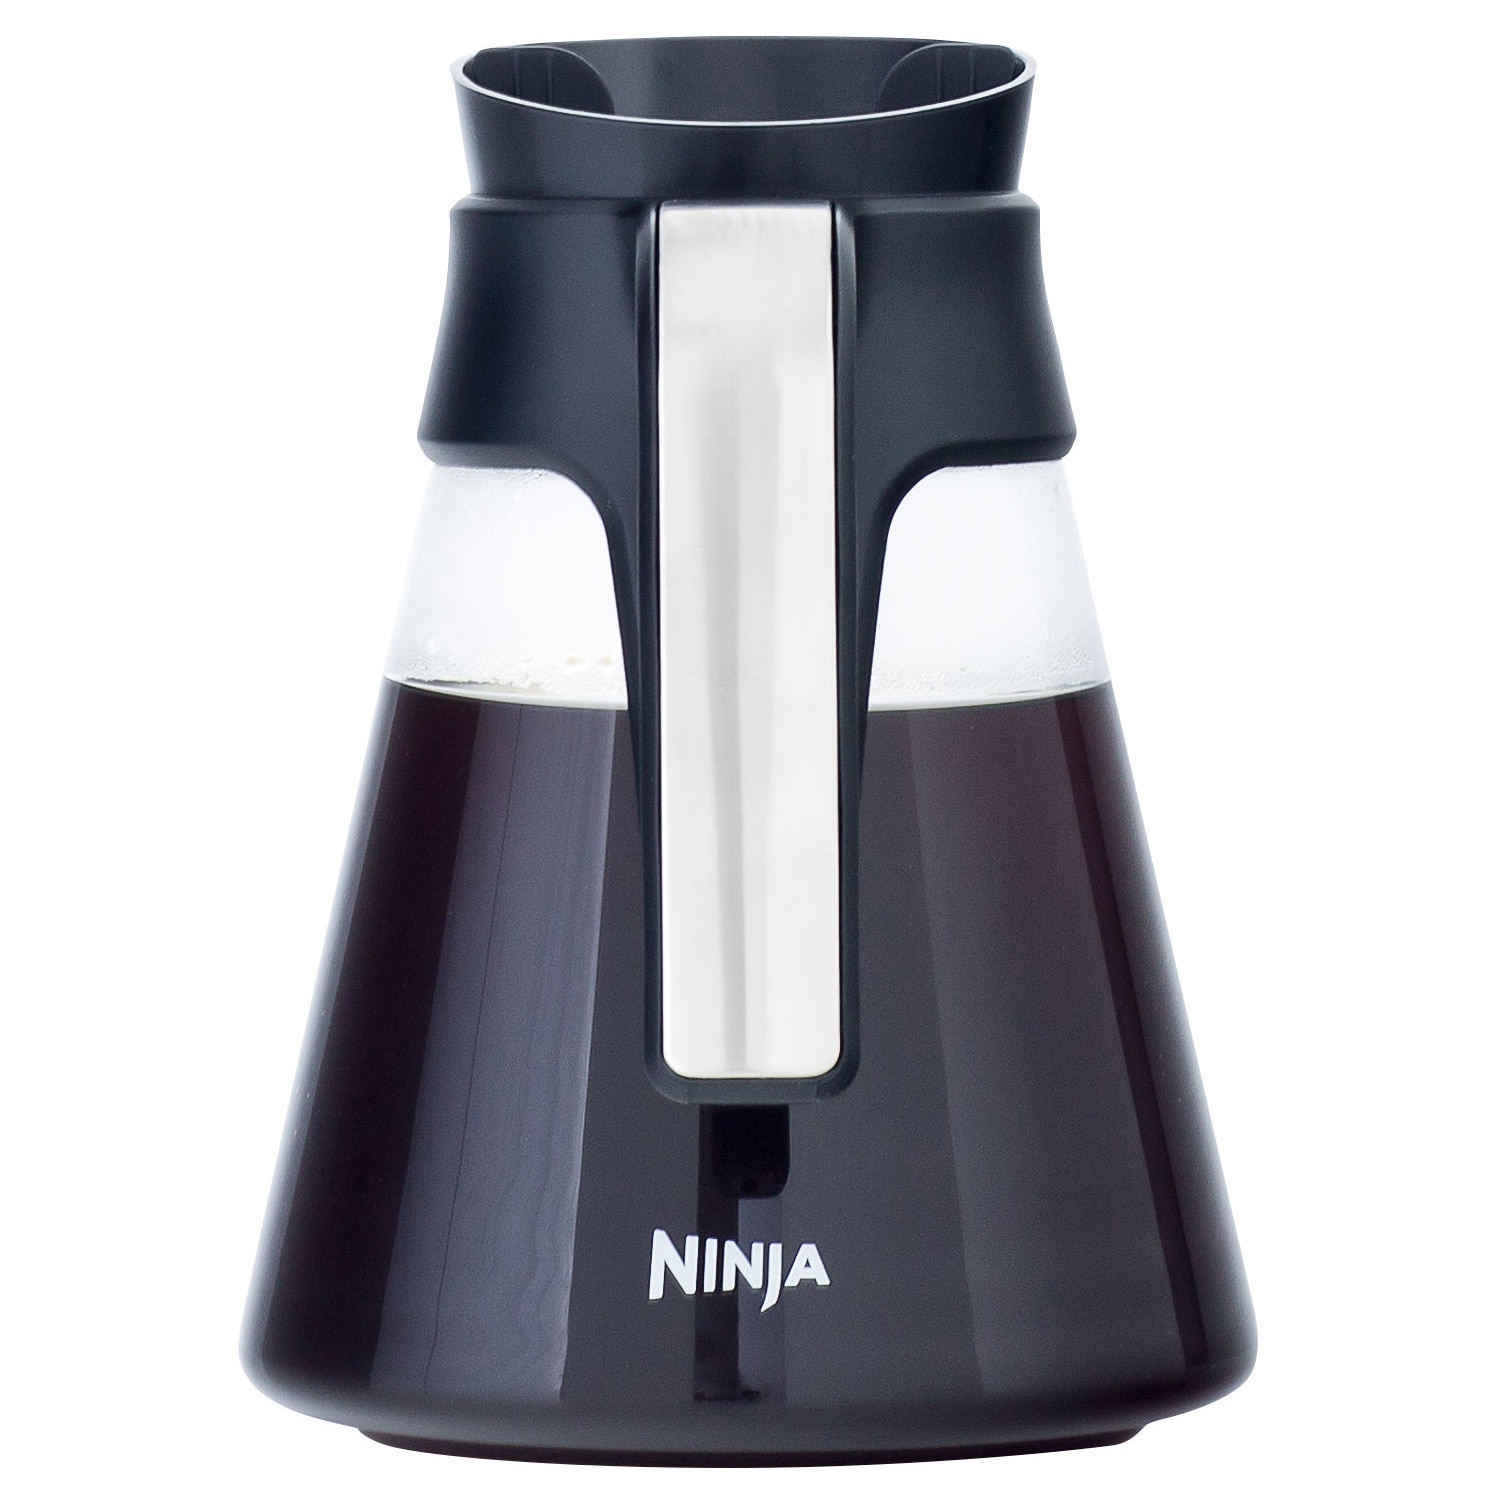 https://ak1.ostkcdn.com/images/products/10470657/Ninja-Coffee-Bar-Replacement-Glass-Carafe-82fca540-1c85-49d8-b4ec-7a0c47685a9c.jpg